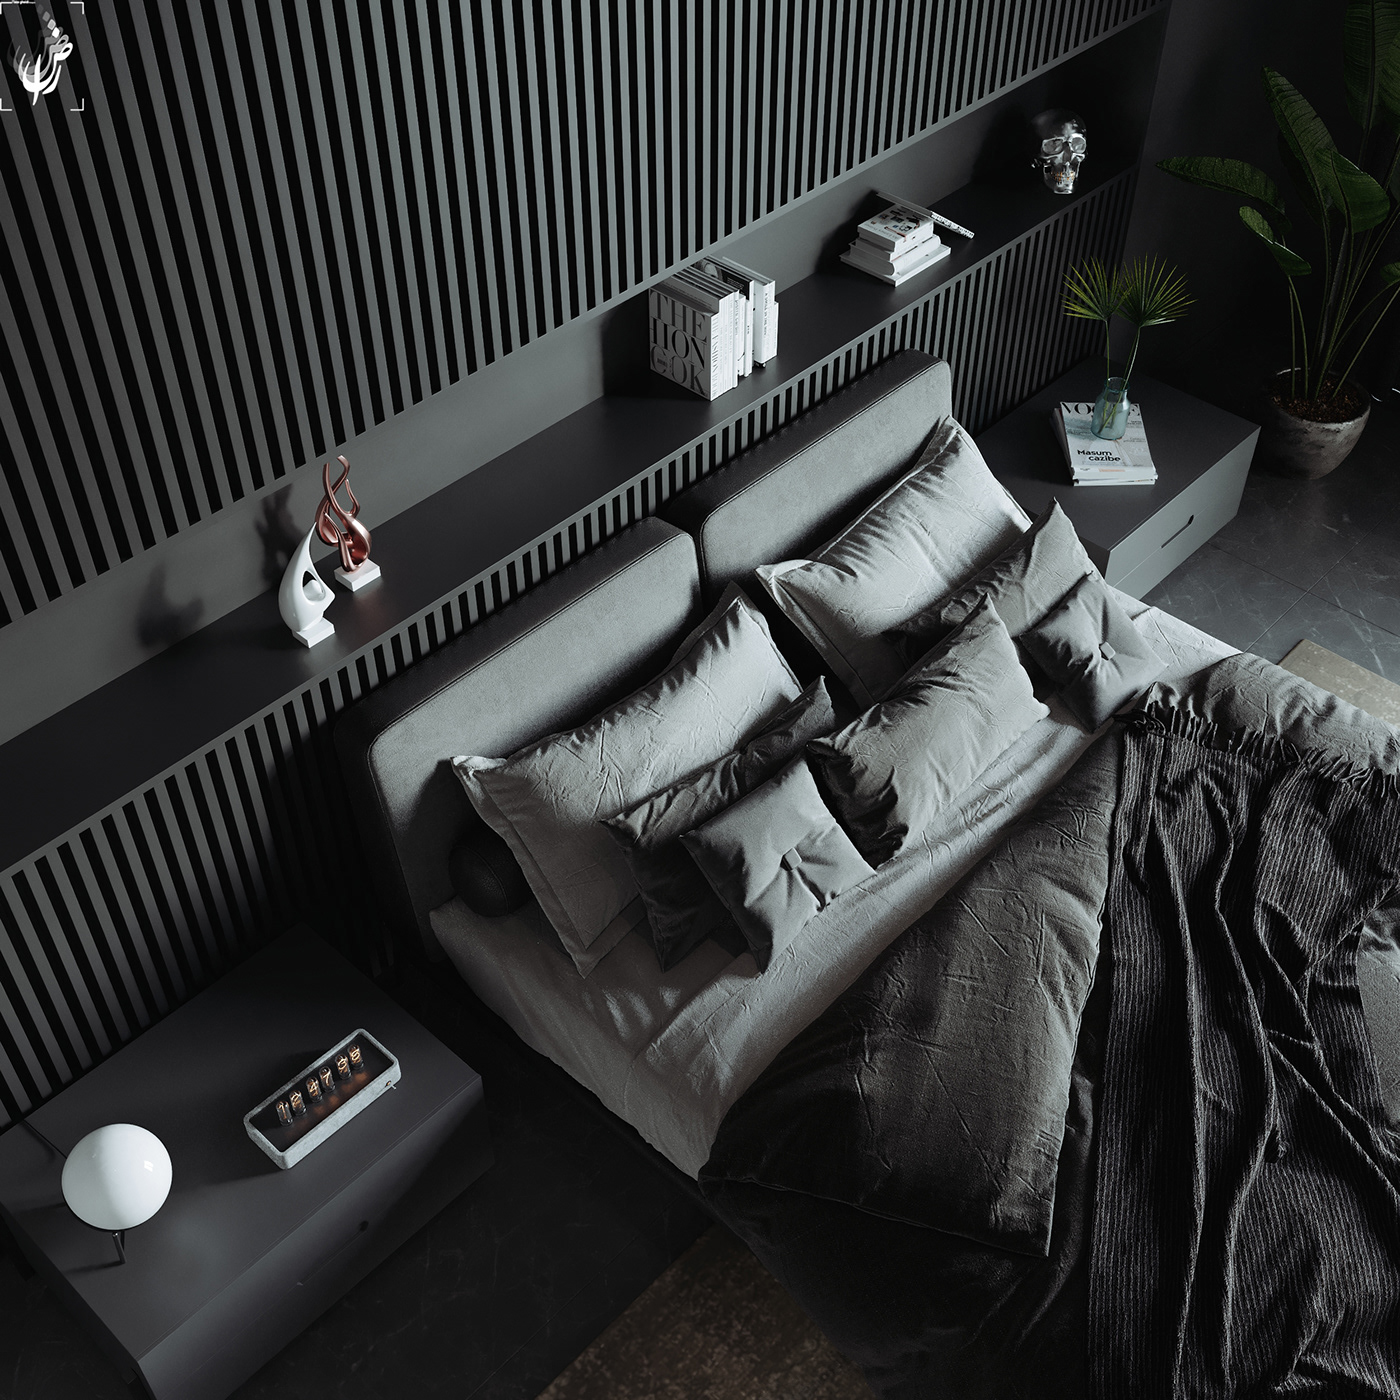 bed bedroom black wood